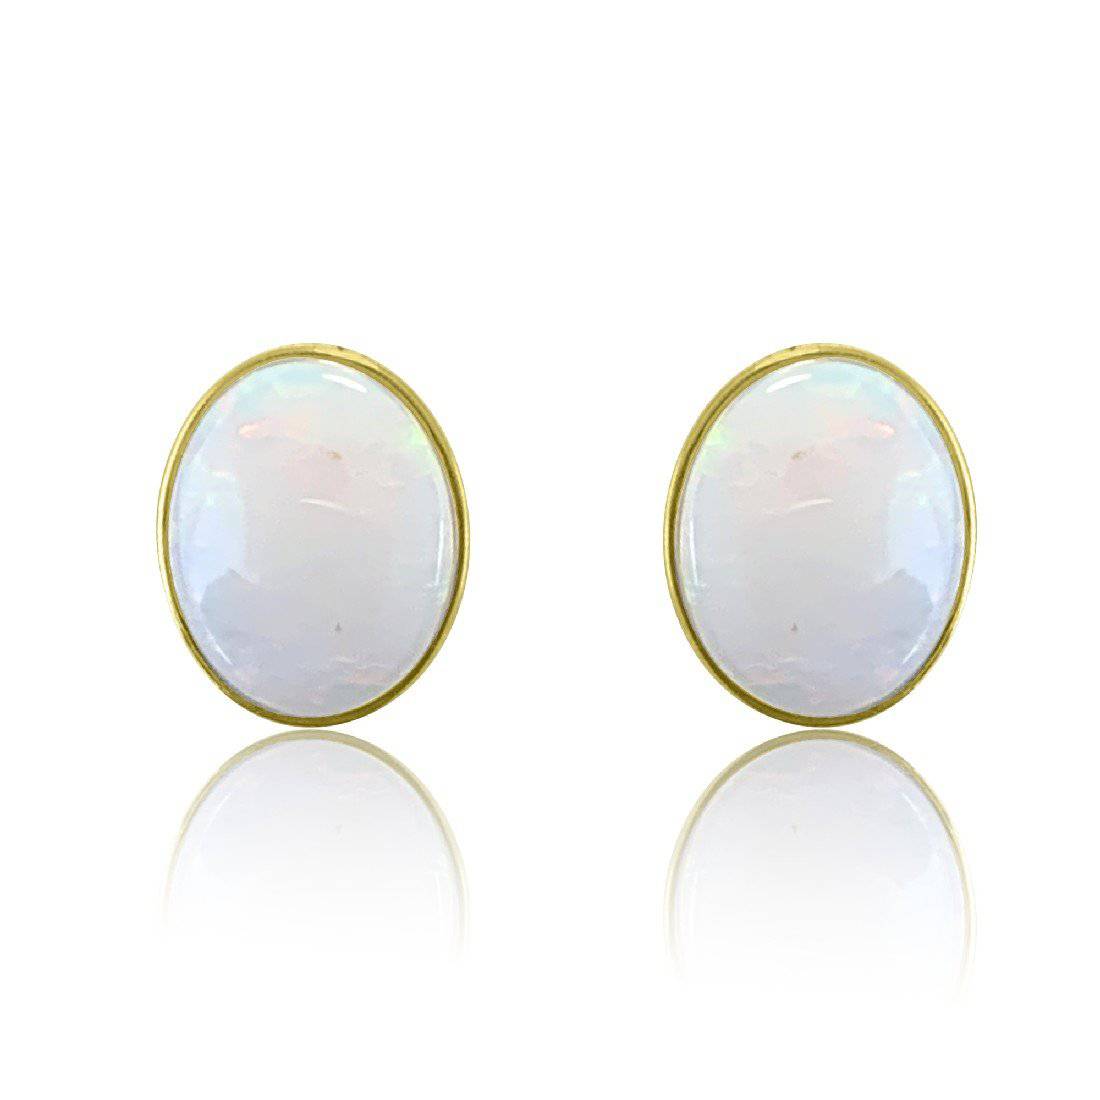 9kt Yellow Gold Opal studs - Masterpiece Jewellery Opal & Gems Sydney Australia | Online Shop